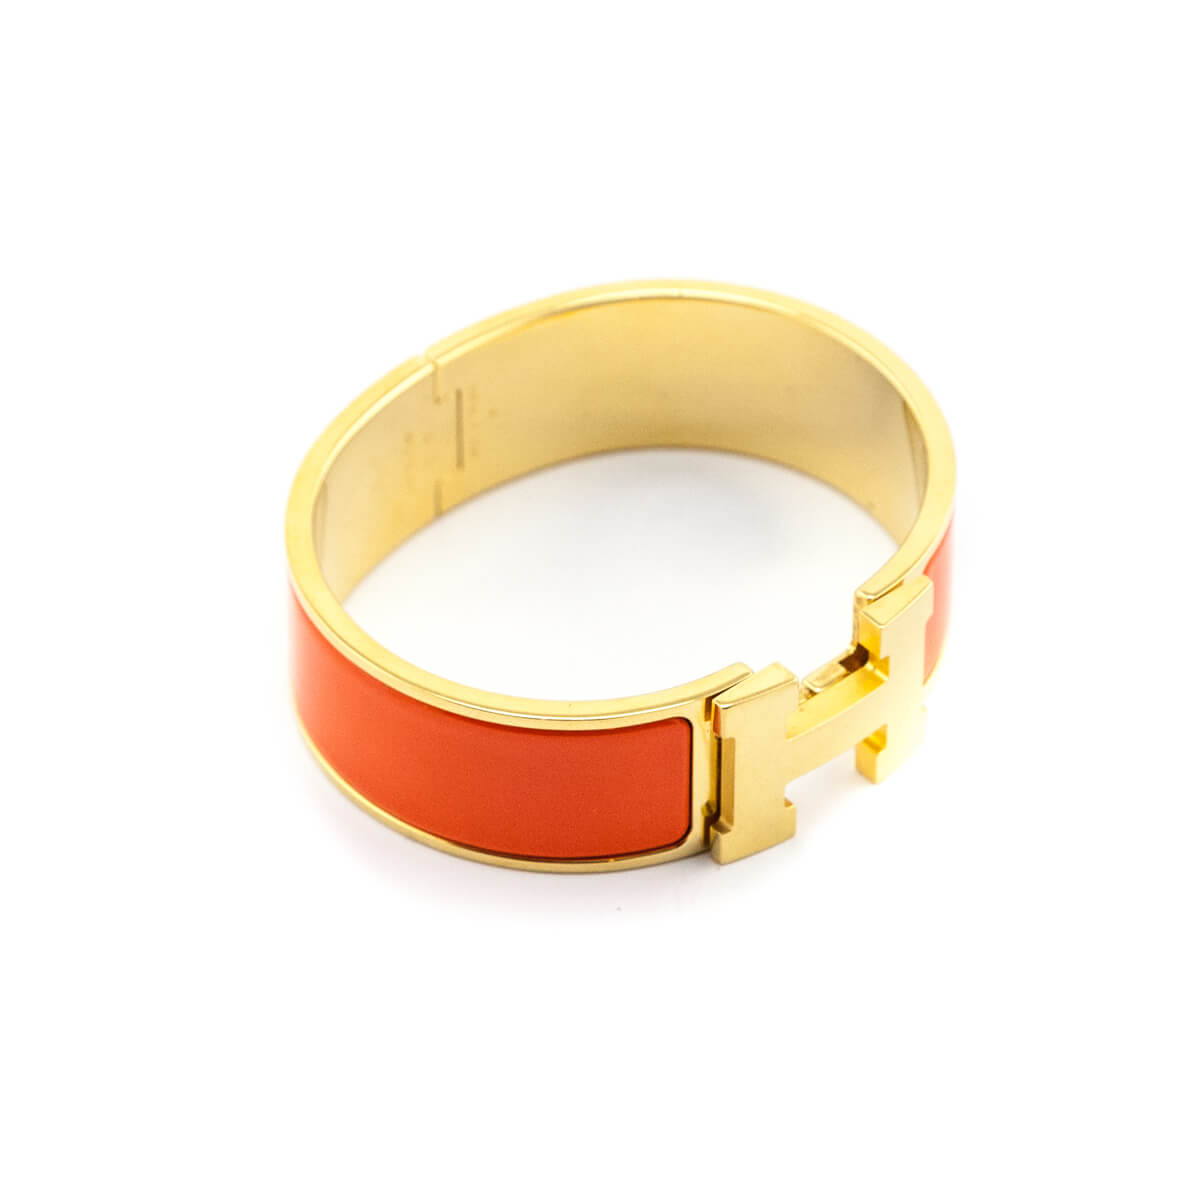 hermes bracelet orange